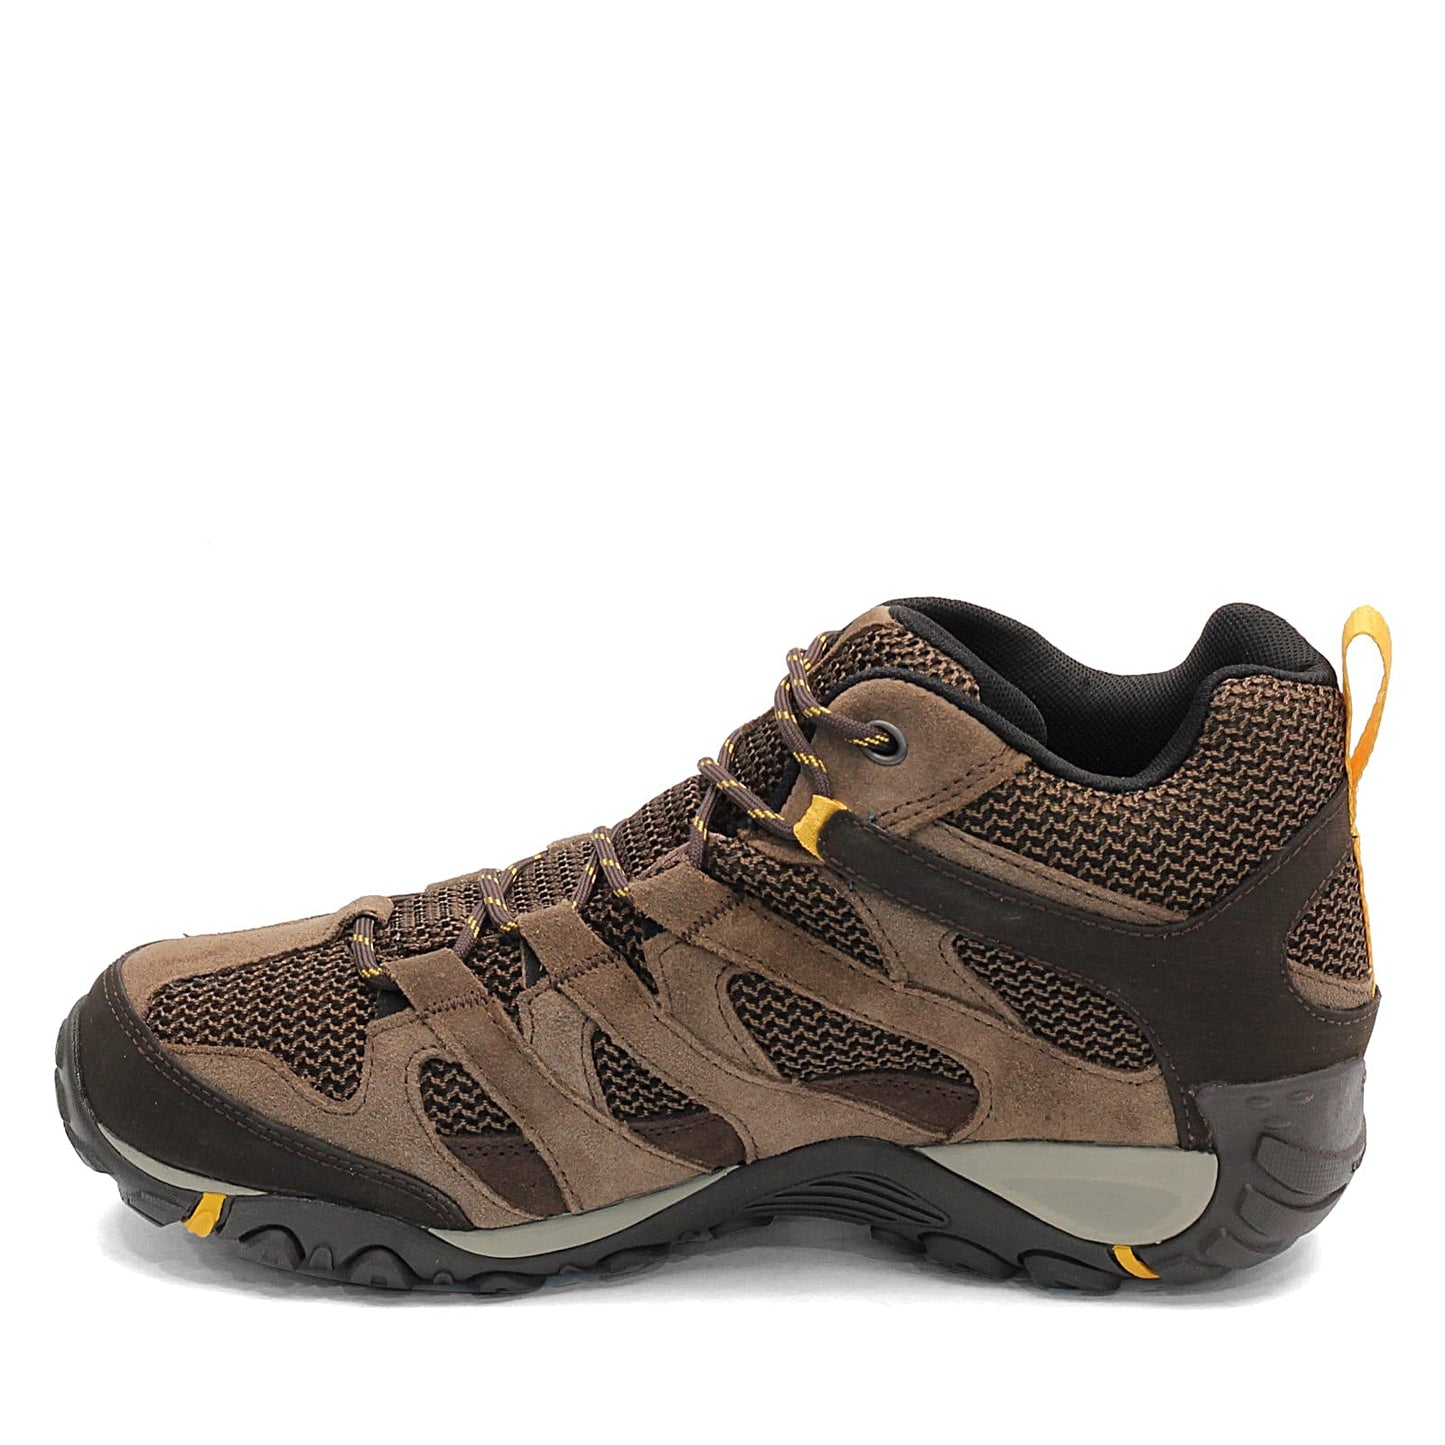 Peltz Shoes  Men's Merrell Alverstone Mid Hiking Boot - Wide Width